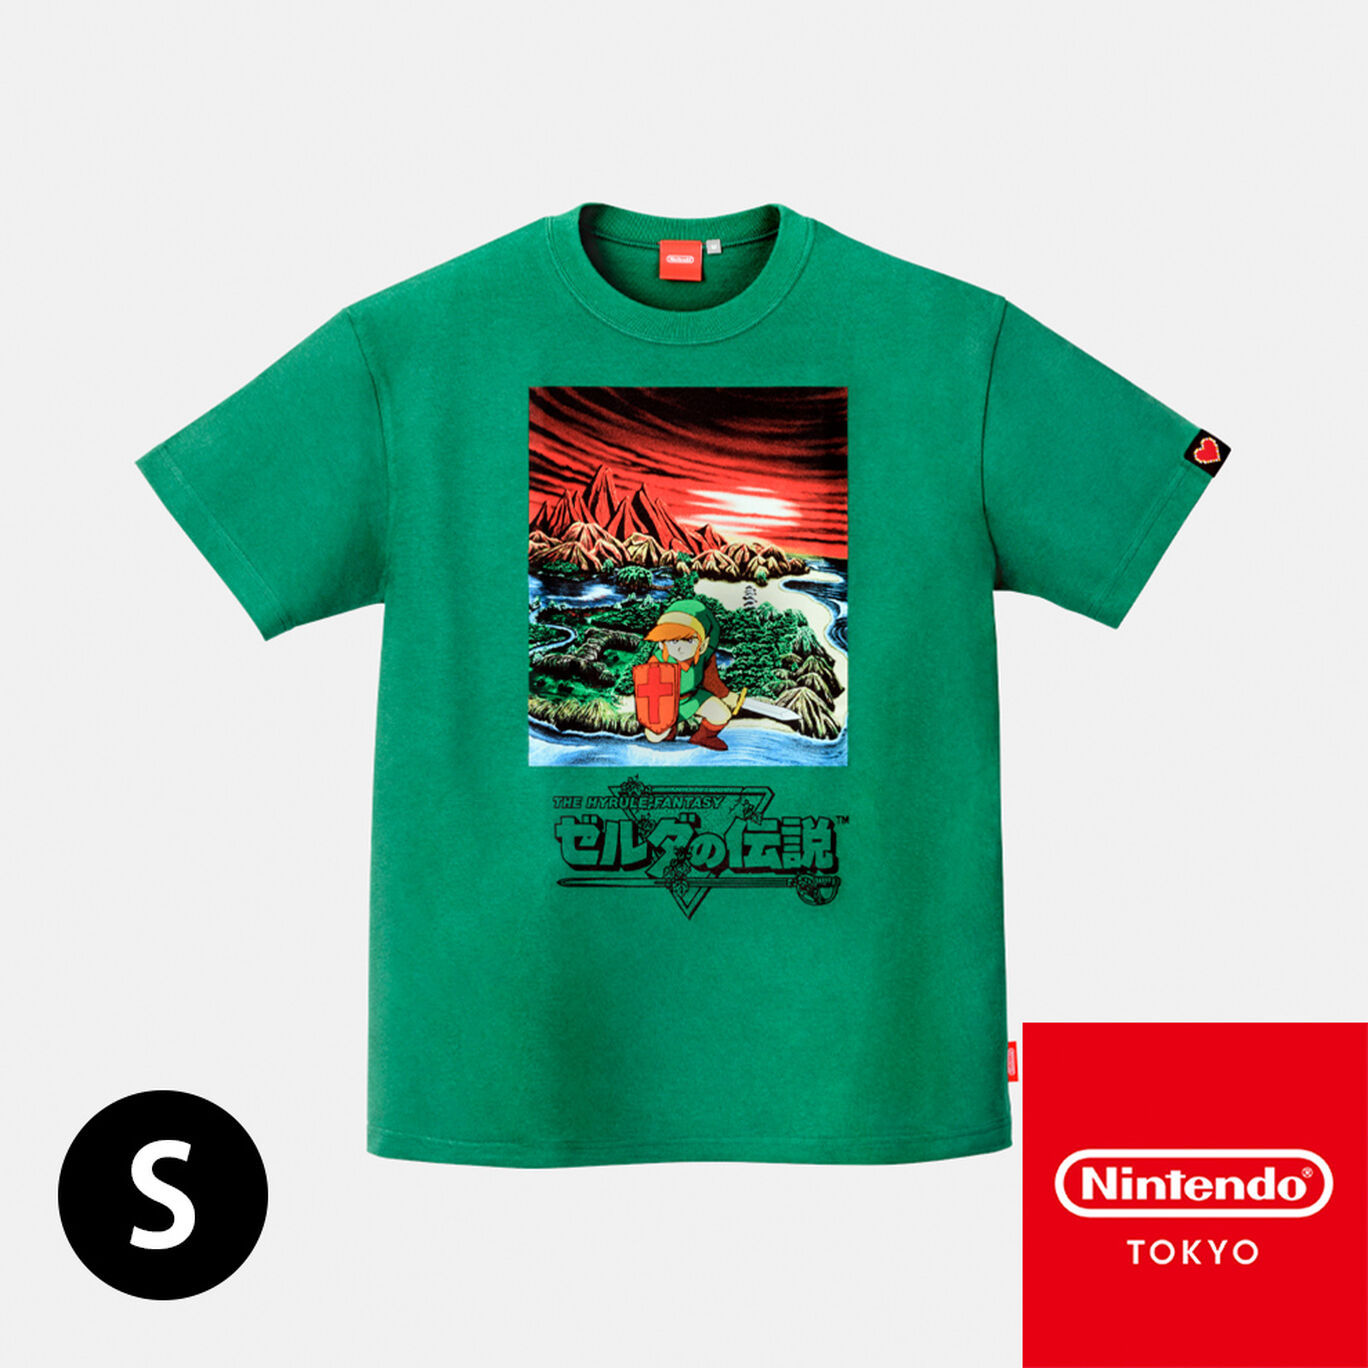 Tシャツ ゼルダの伝説 S【Nintendo TOKYO取り扱い商品】